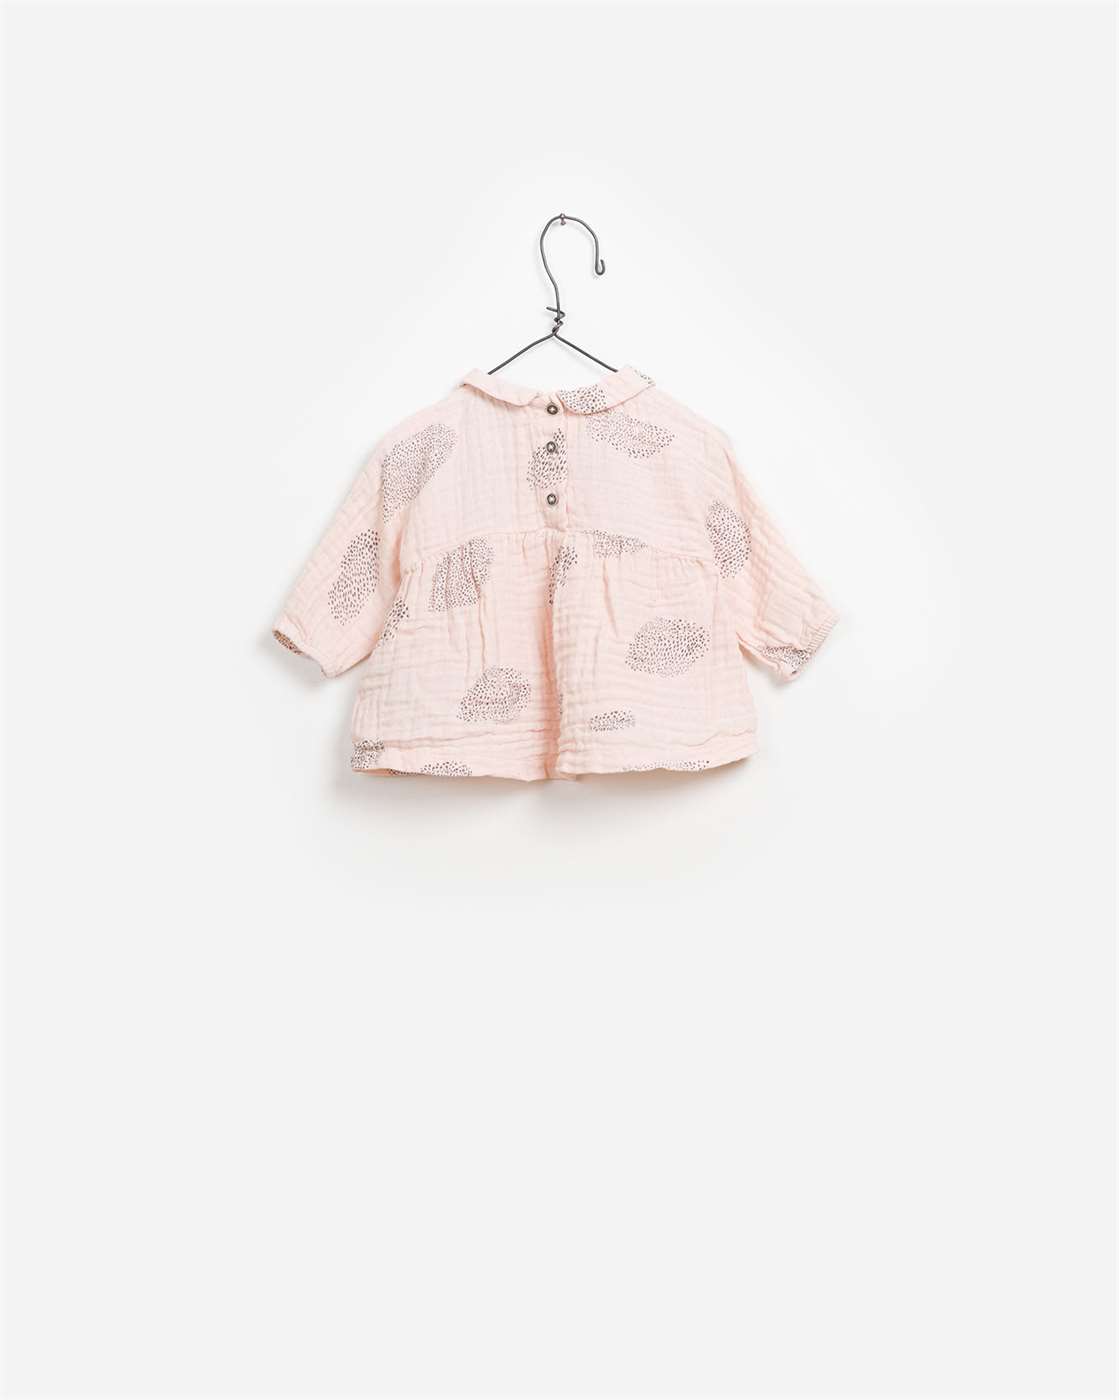 BeeBoo|BeeBoo PlayUp vêtement bébé baby cloth blouse imprimé woven print coton bio organic cotton rose pink 1